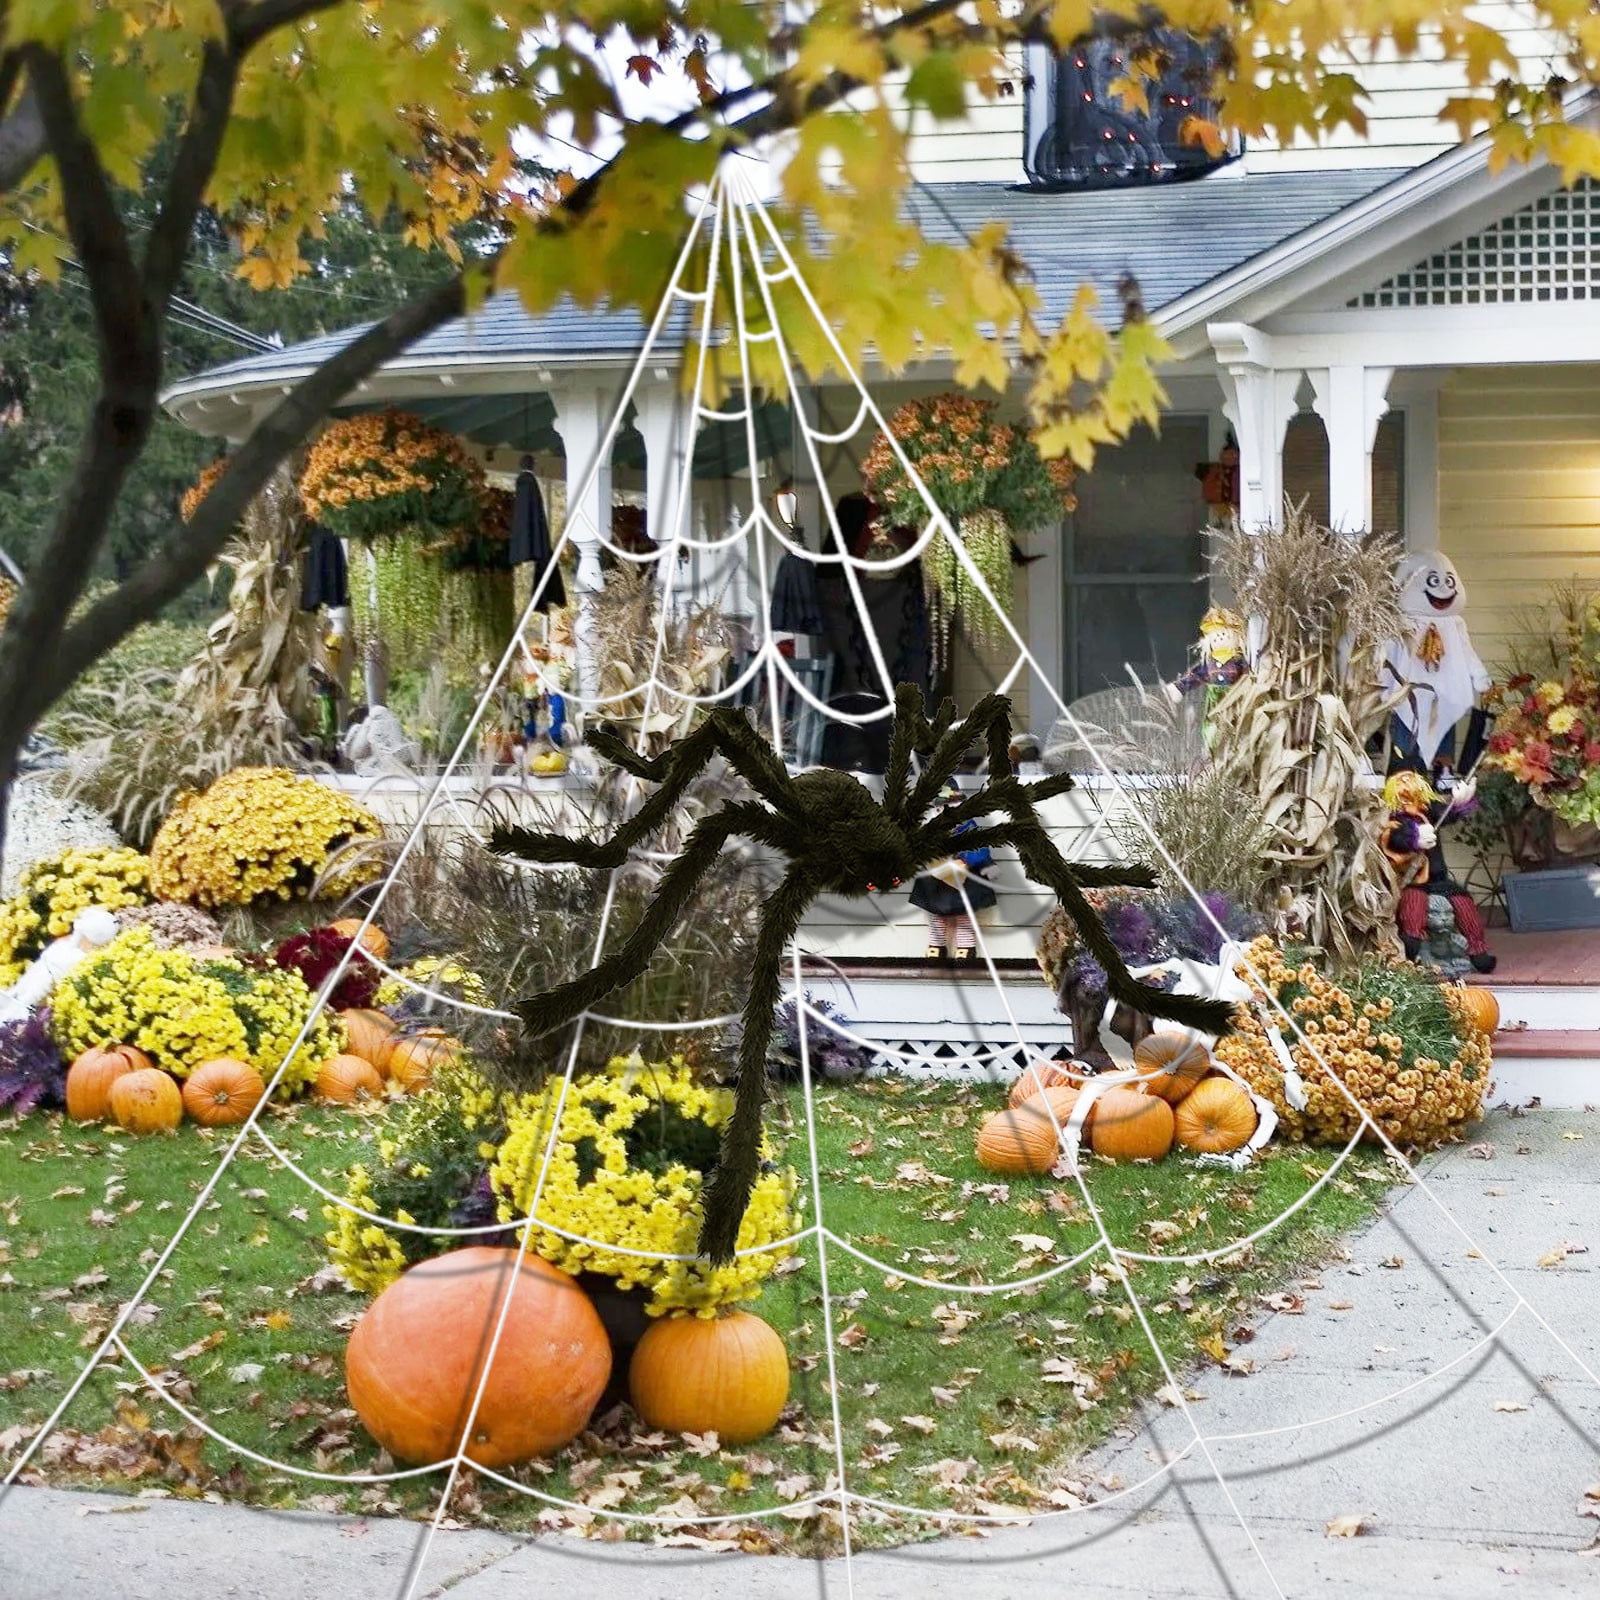 Vikakiooze Halloween Decorations Outdoor Decoration Cobwebs And ...